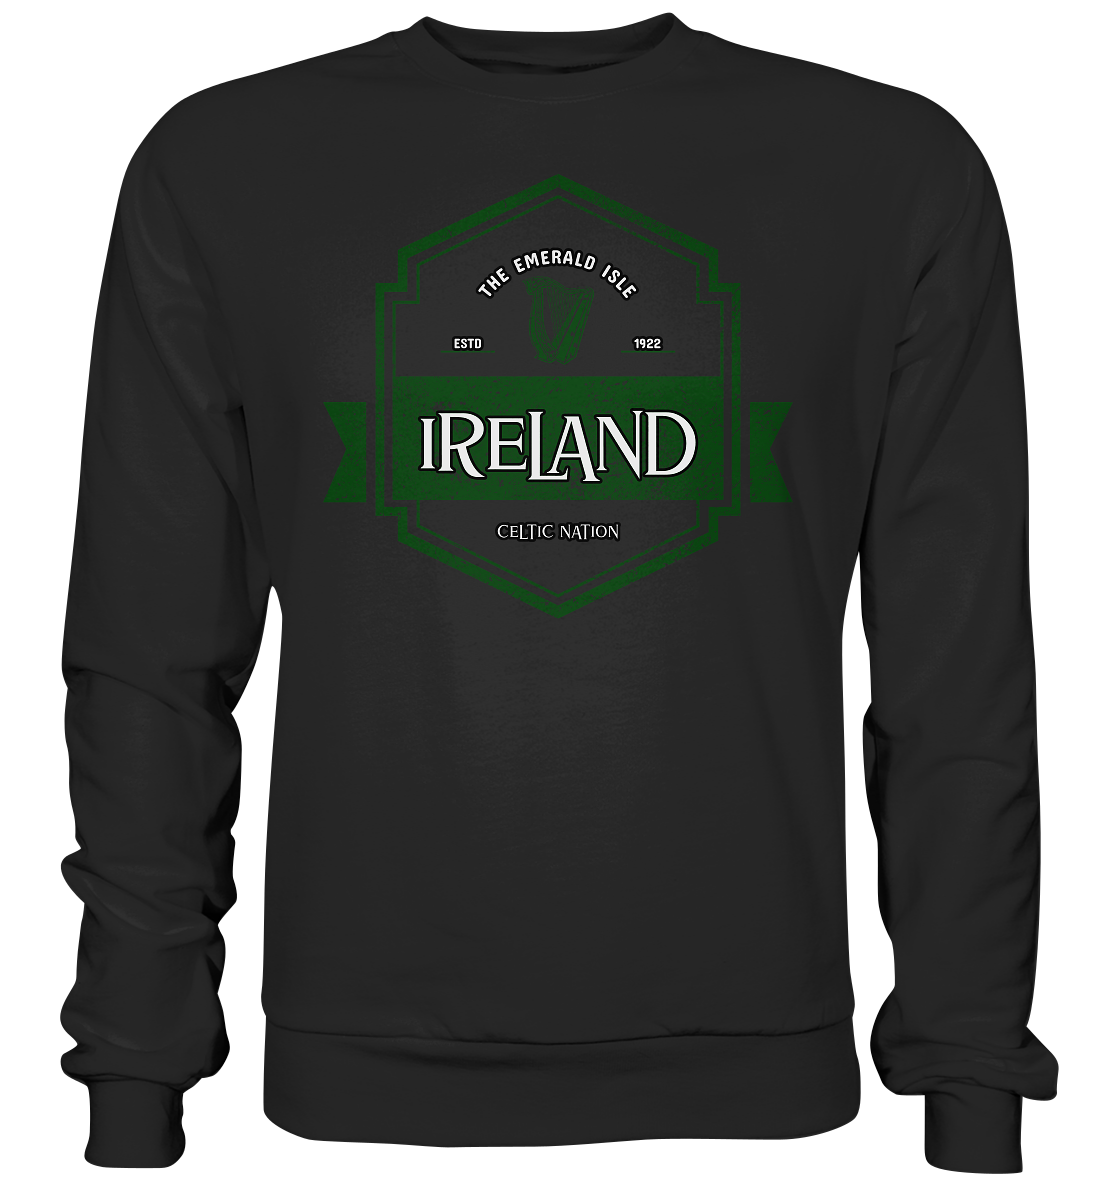 Ireland "The Emerald Isle / Celtic Nation" - Premium Sweatshirt